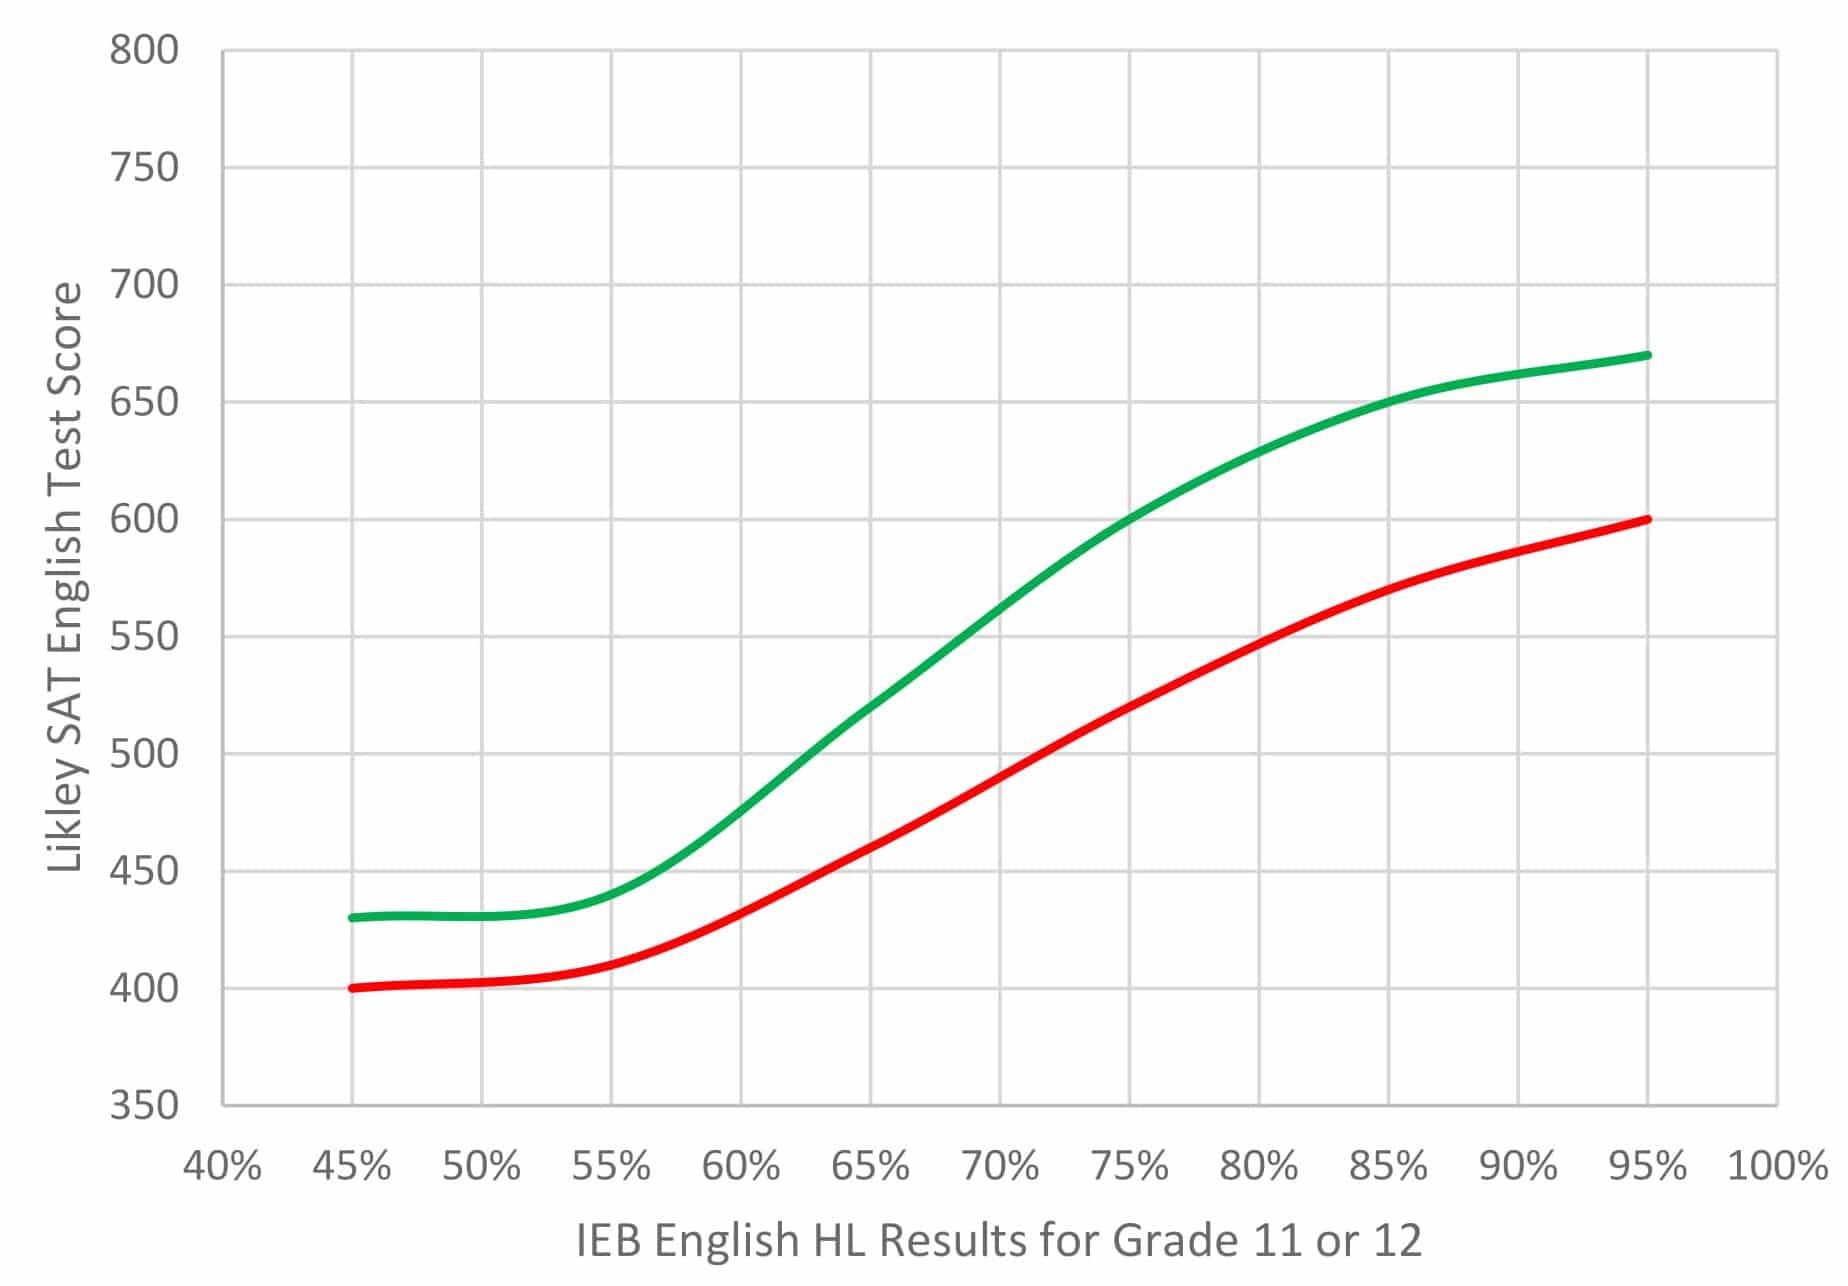 IEB English compared to SAT English